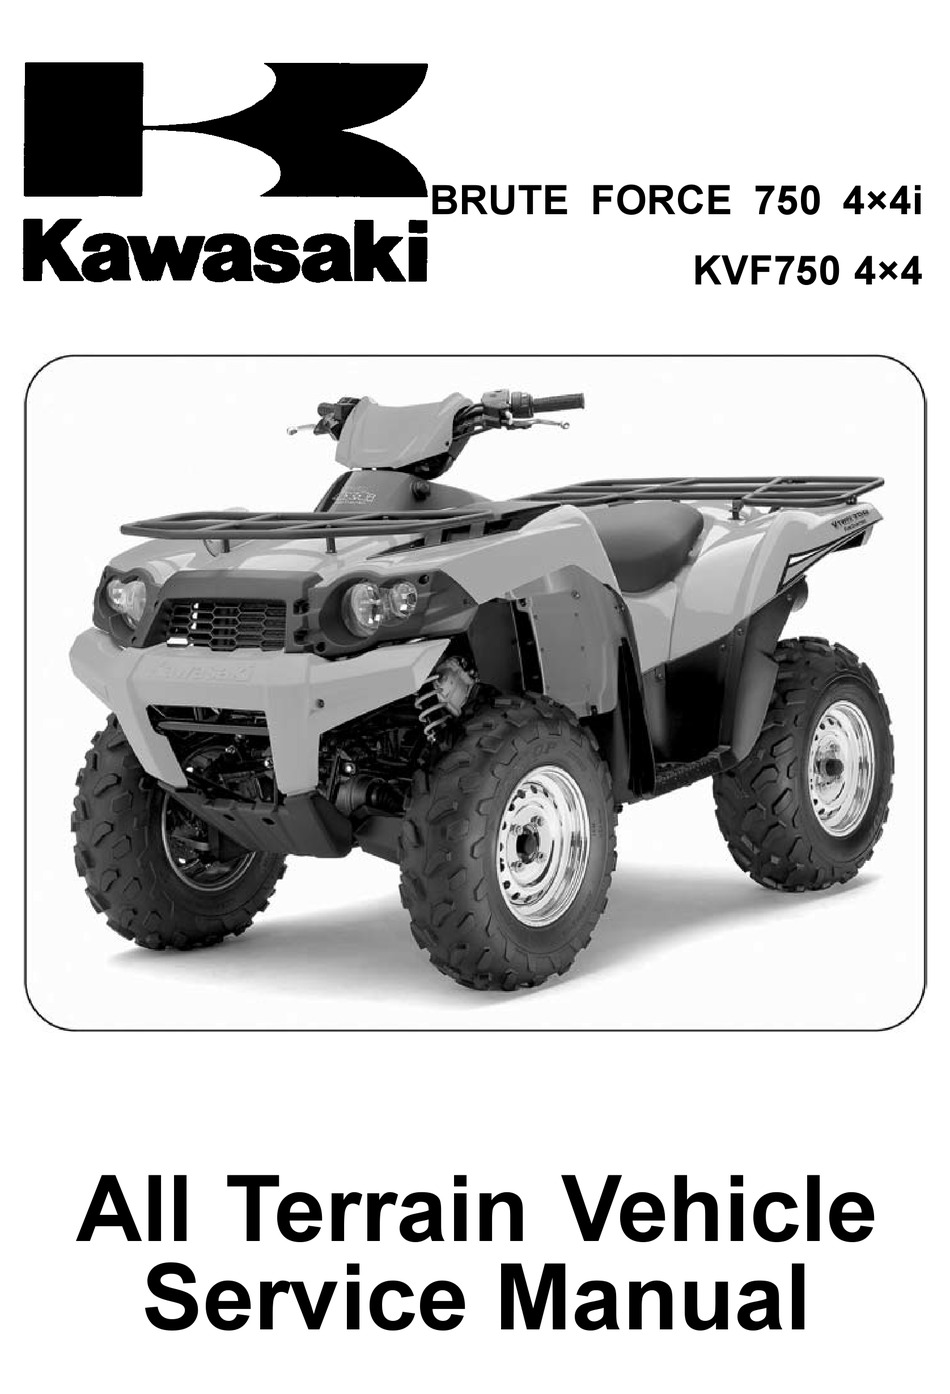 Kawasaki Brute Force 750 4x4i